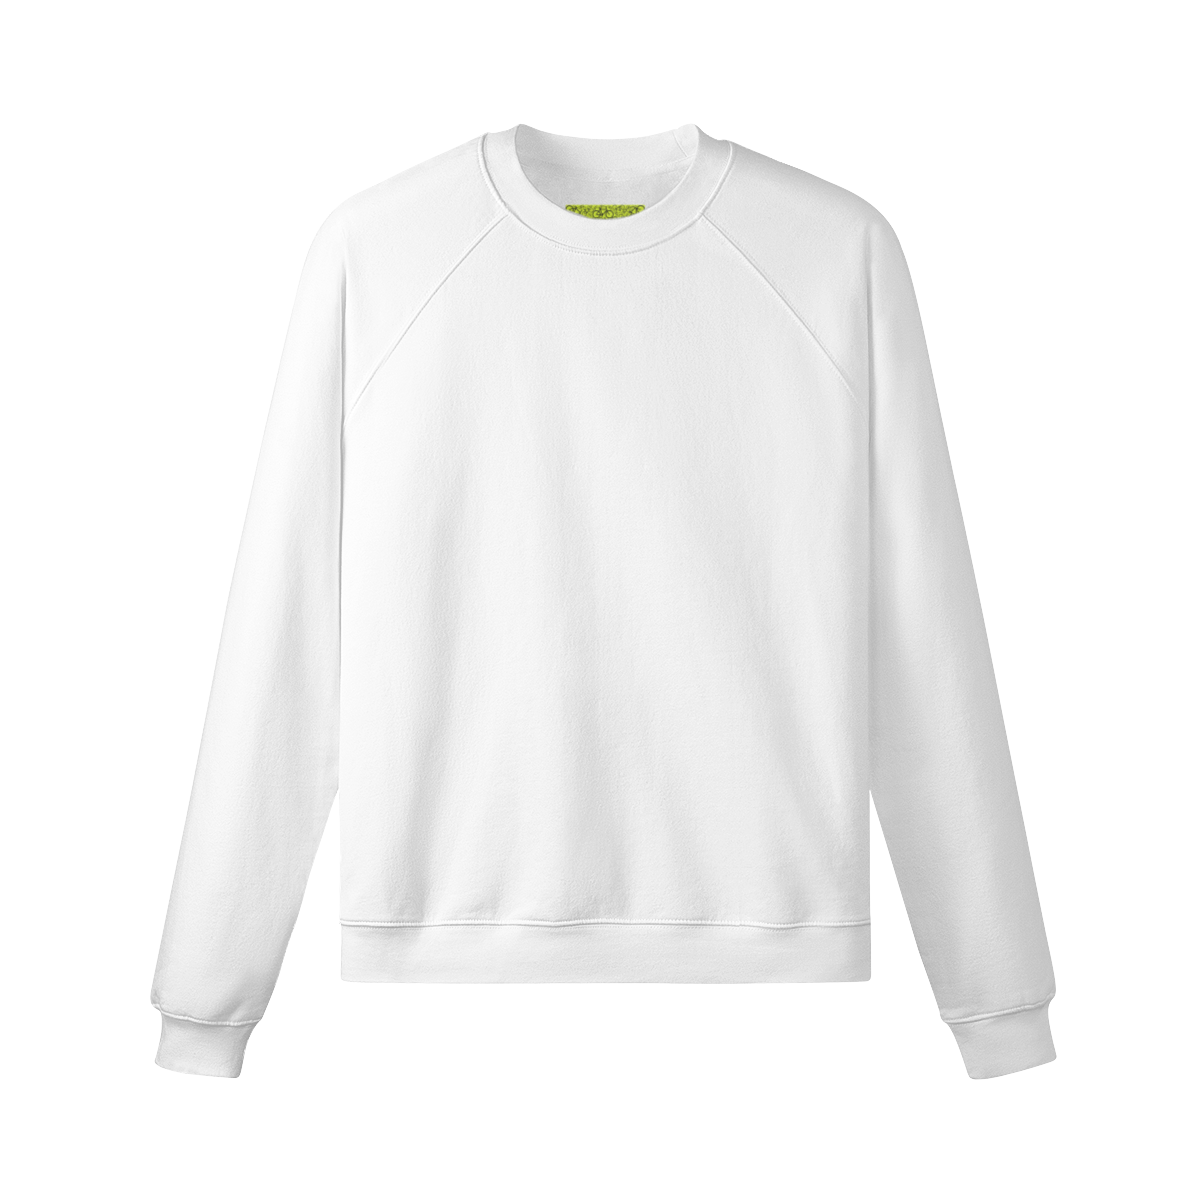 BACK PRINT RAVE DADDY - Unisex Fleece-lined Sweatshirt - WHITE - FRONT